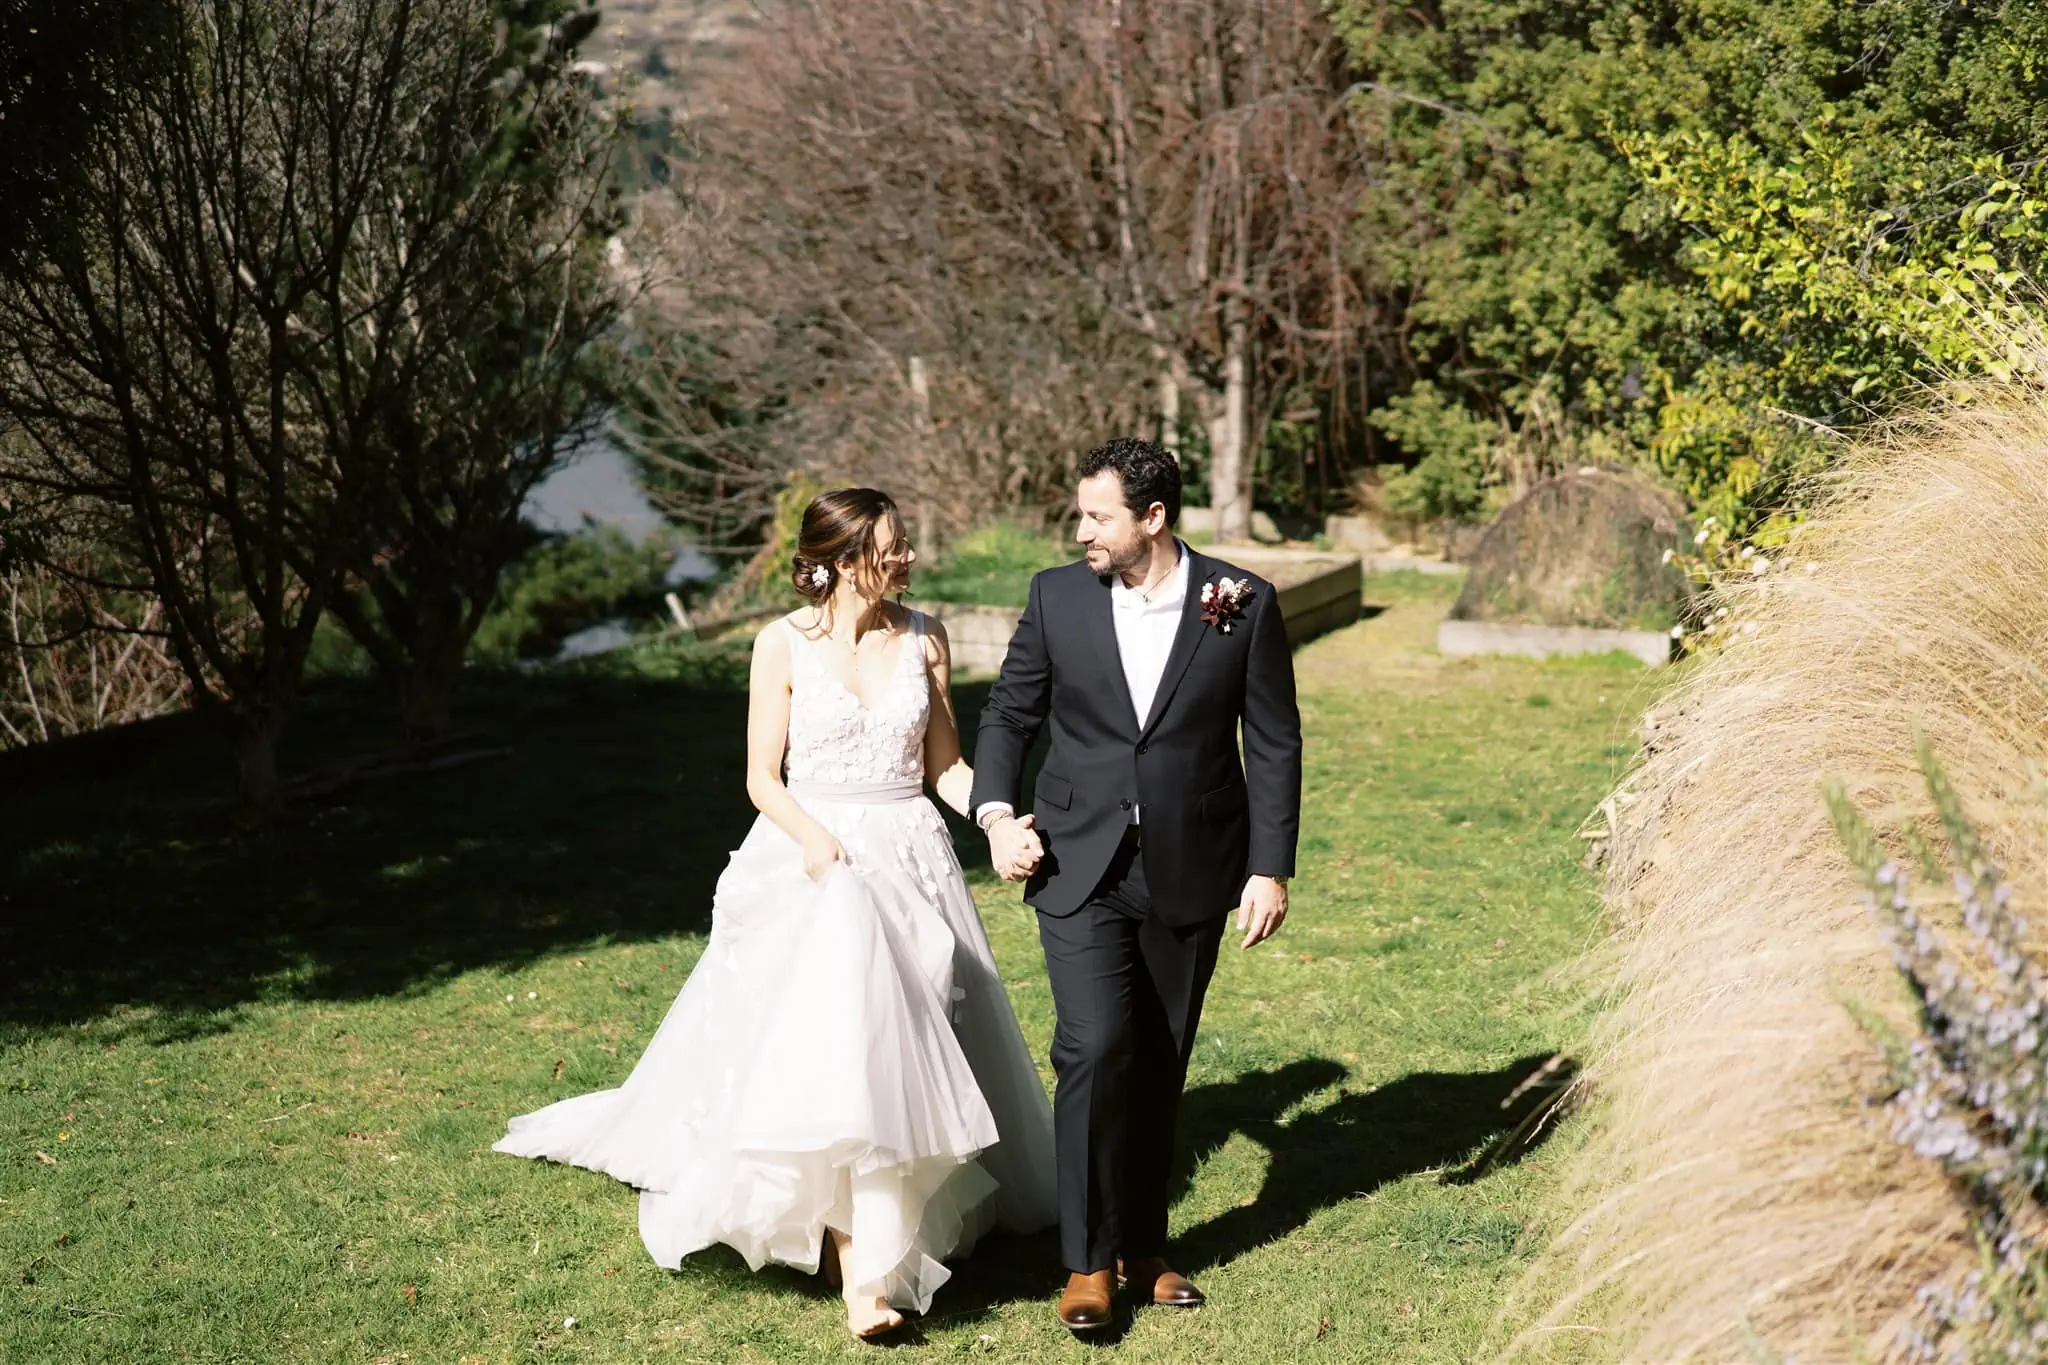 Queenstown New Zealand Elopement Wedding Photographer - A bride and groom, Alex & Shahar, strolling through a scenic grassy field during their Queenstown elopement.